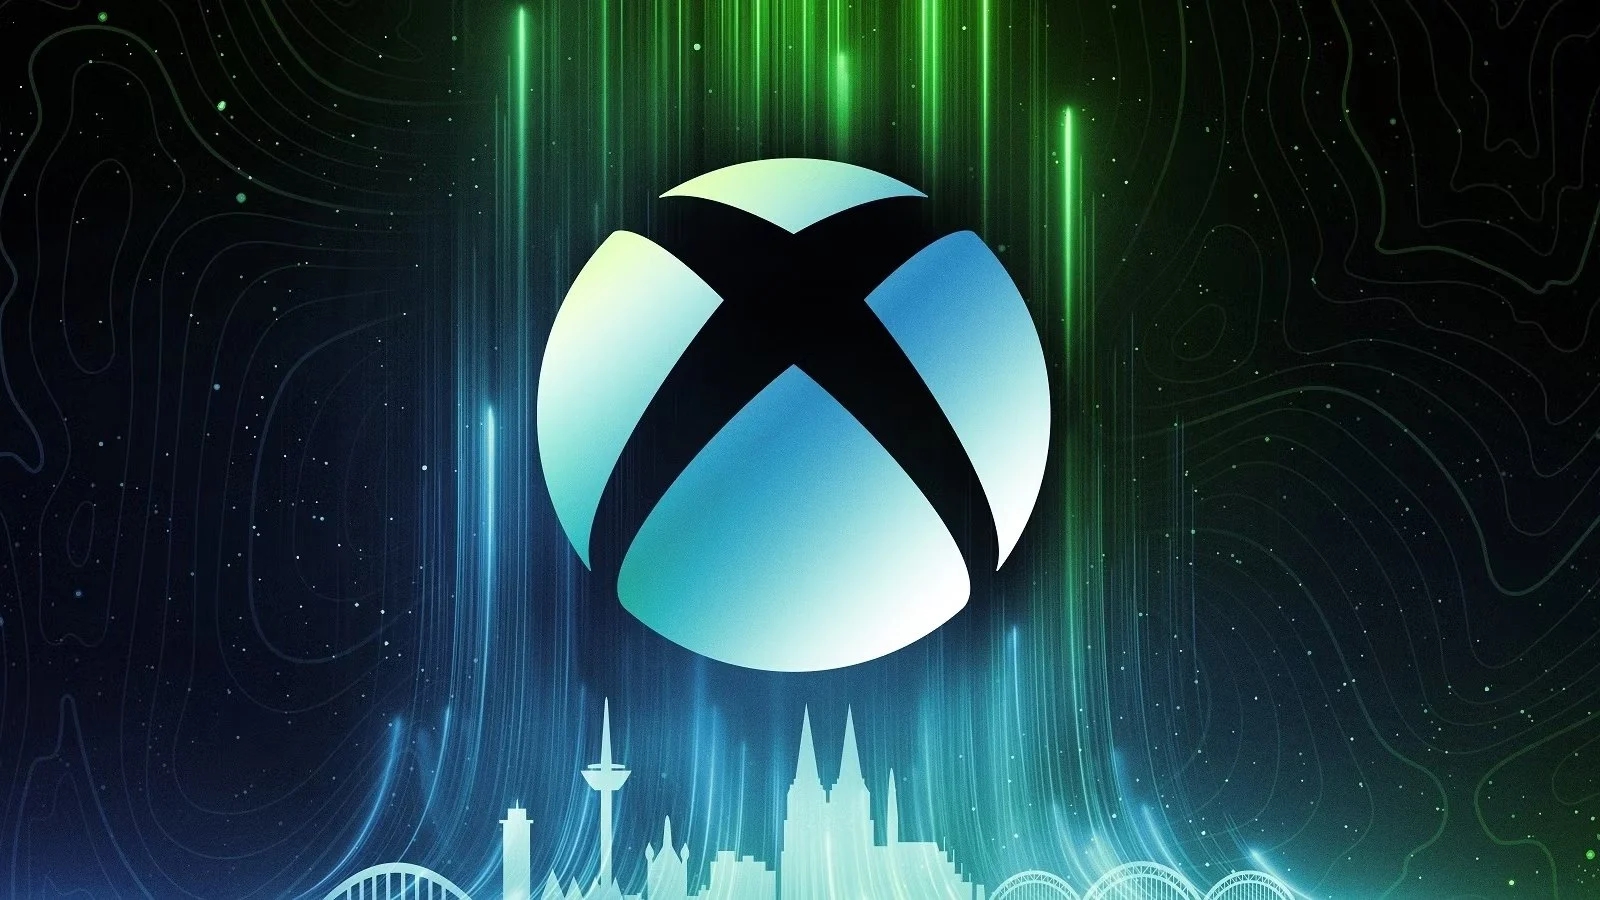 Il logo Xbox